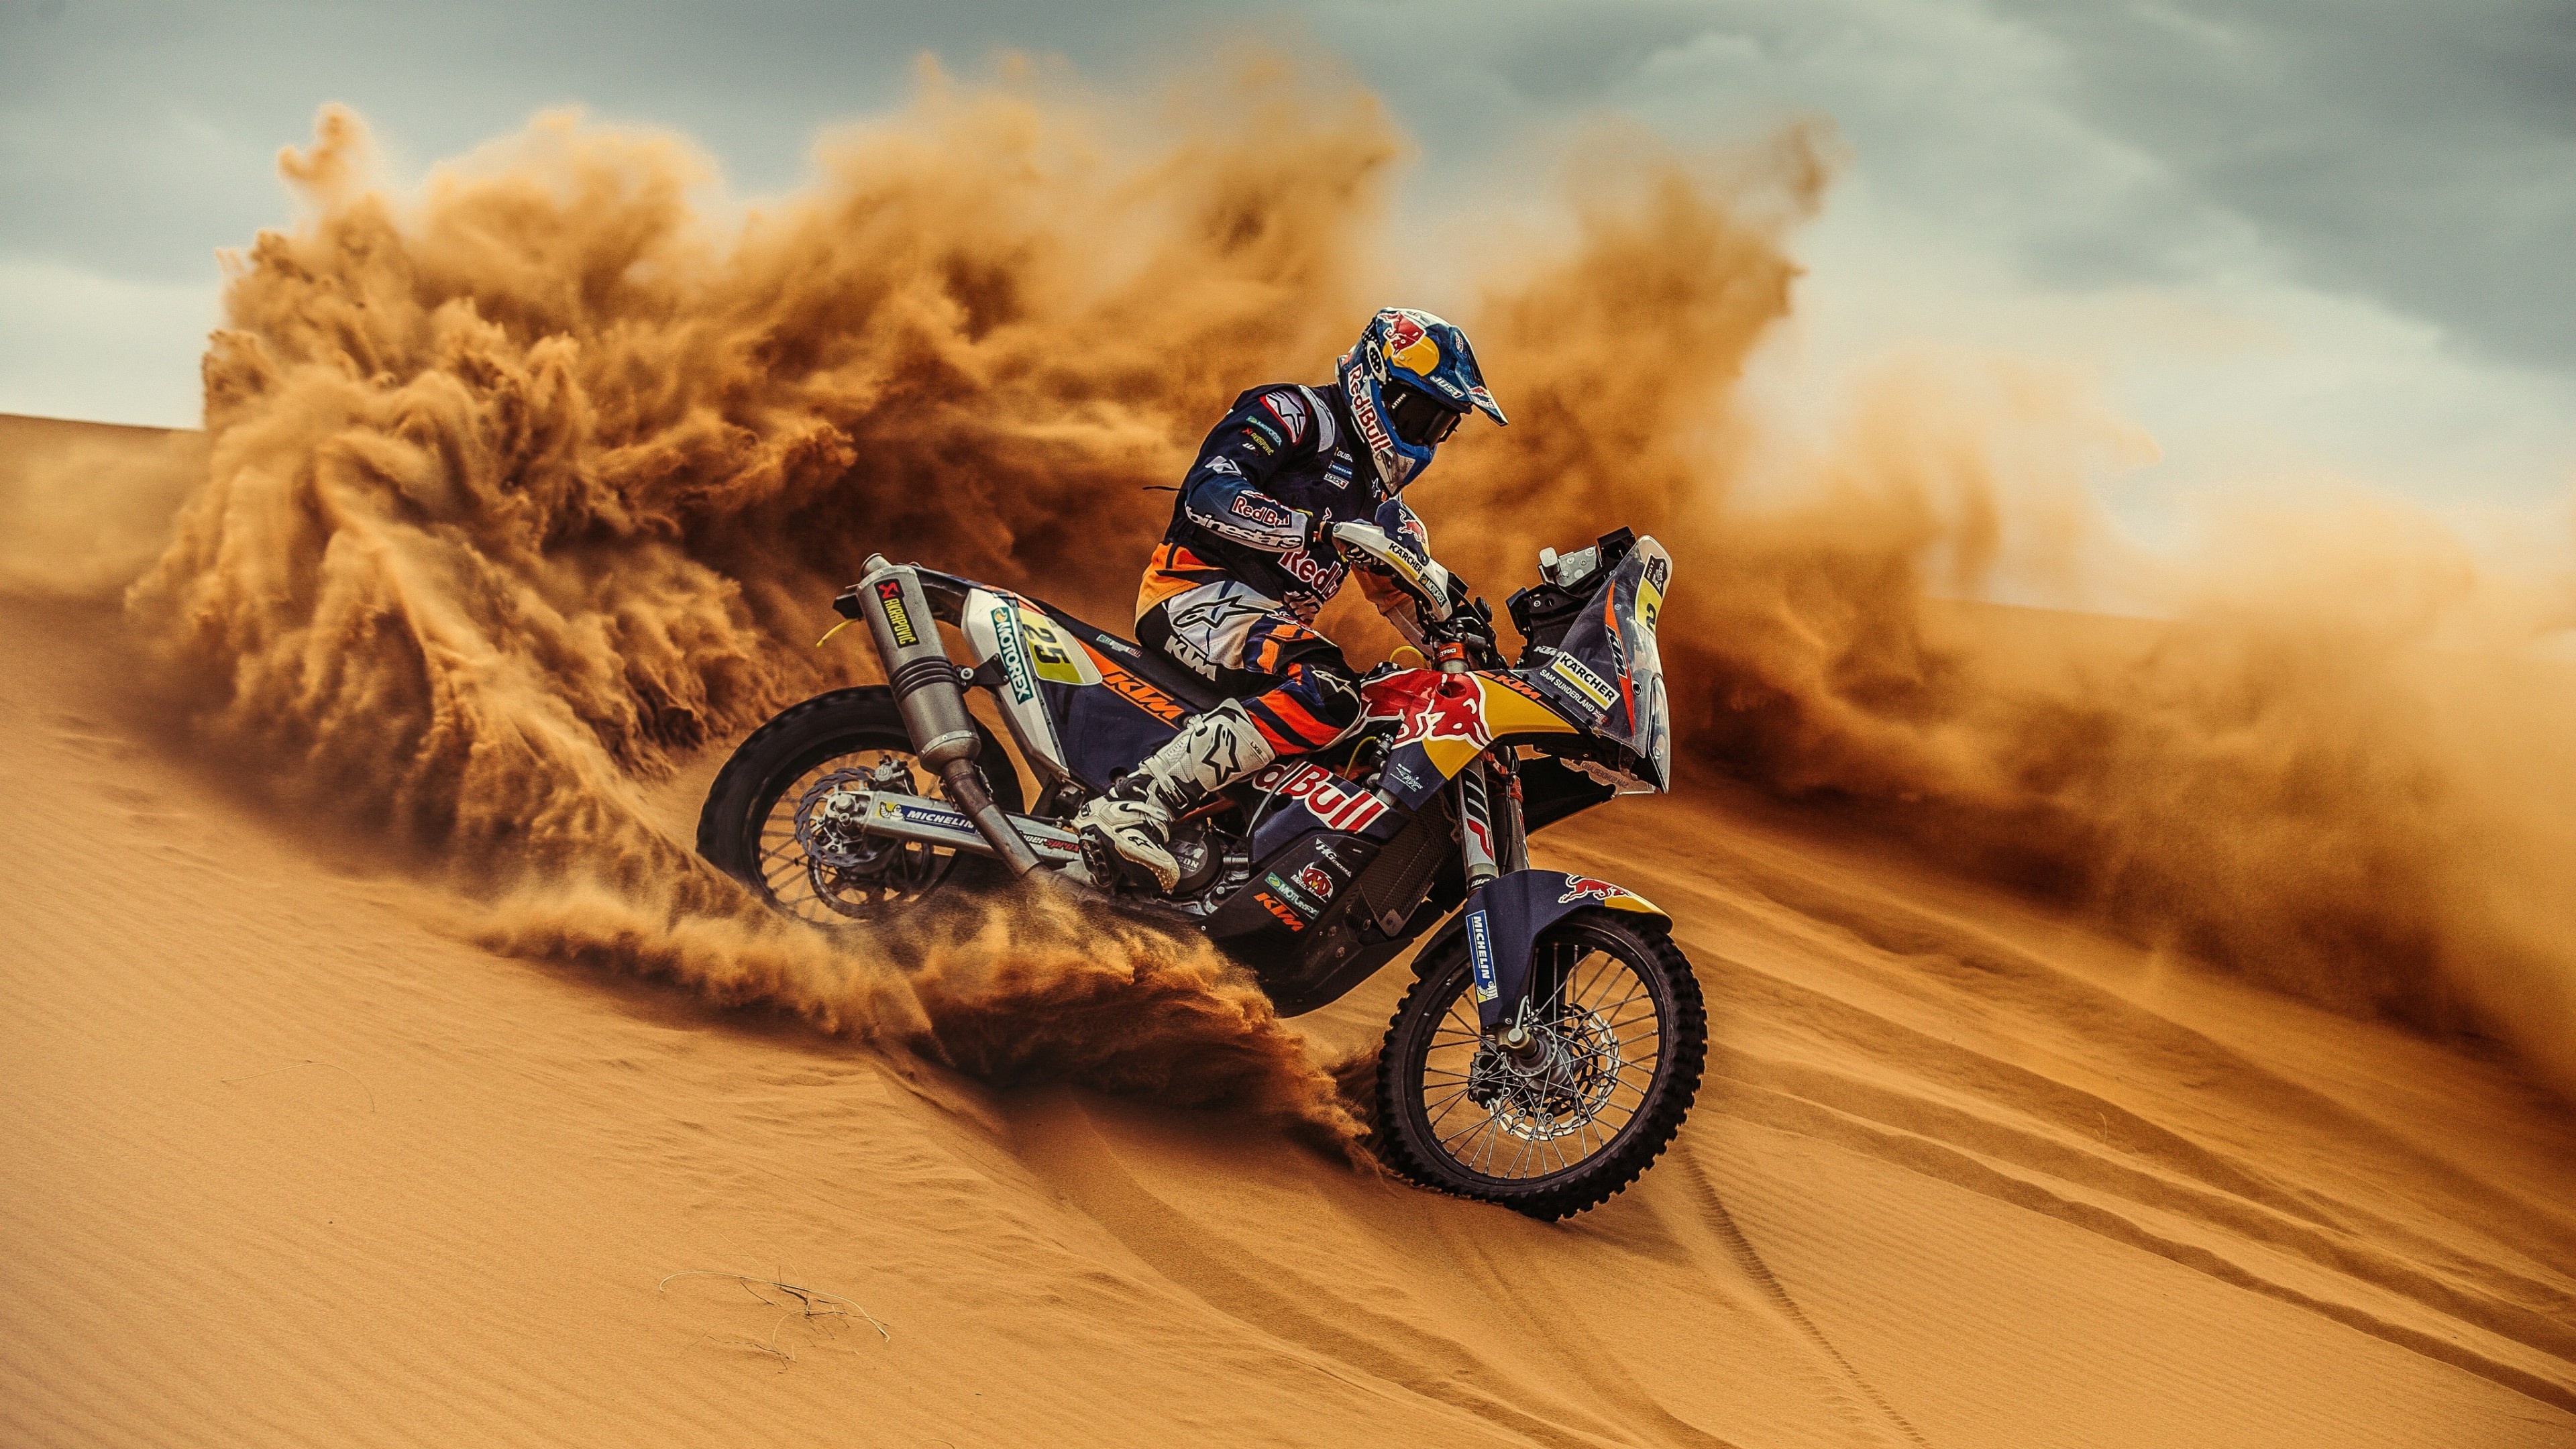 Dakar Rally: The toughest motorsport race, Two weeks of racing, 8,000 kilometers across Saudi Arabia. 3840x2160 4K Background.